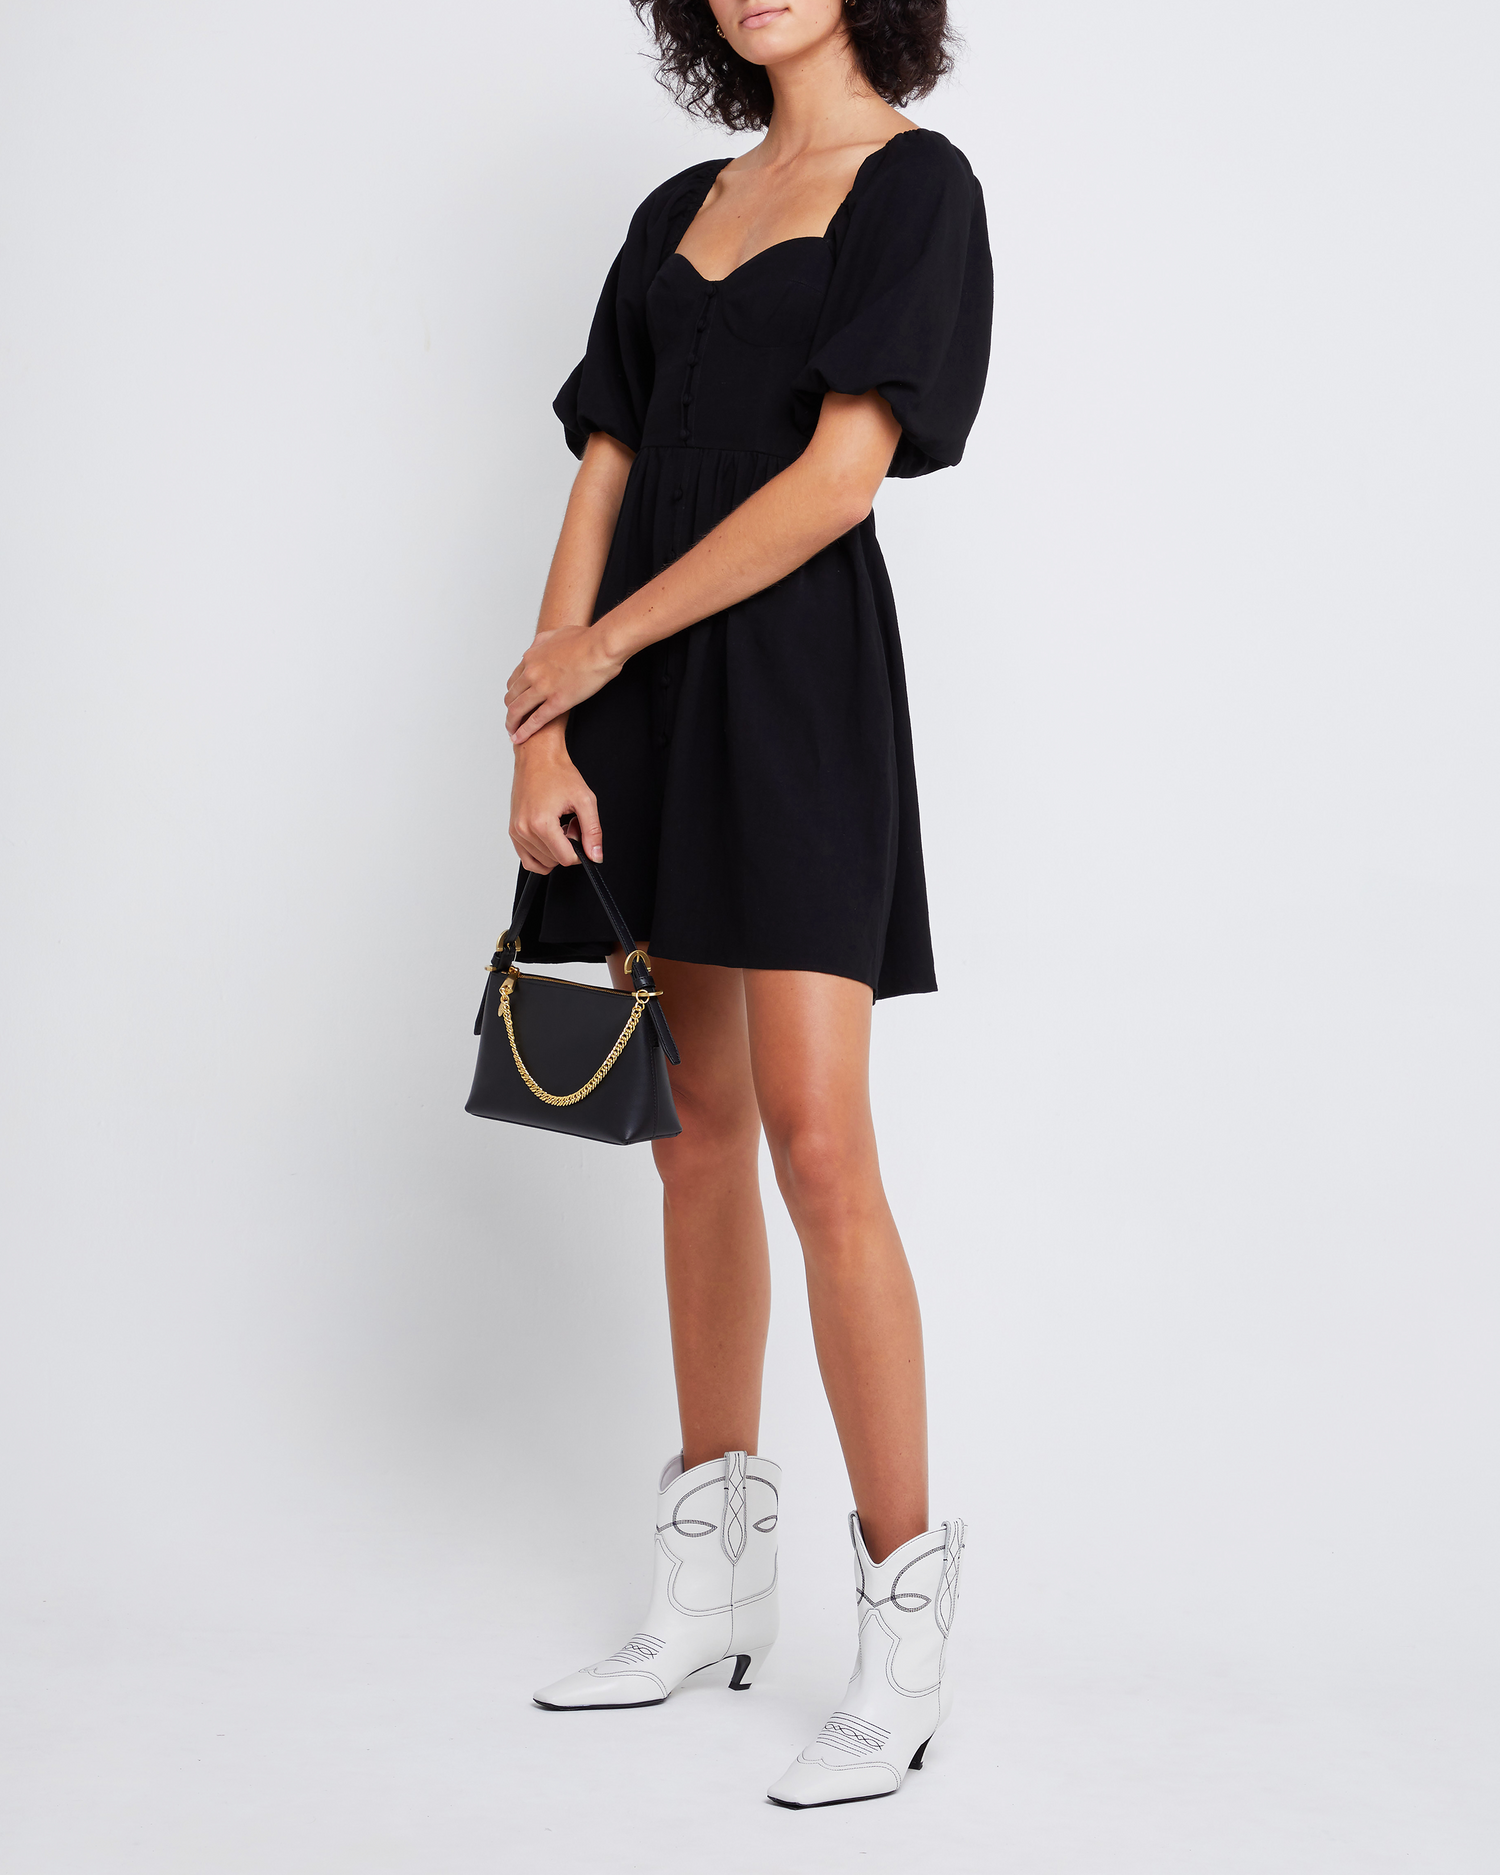 Fourth image of Esperanza Mini Dress, a black mini dress, sweetheart neckline, midi sleeves, 3/4 sleeves, puff sleeves, A-line